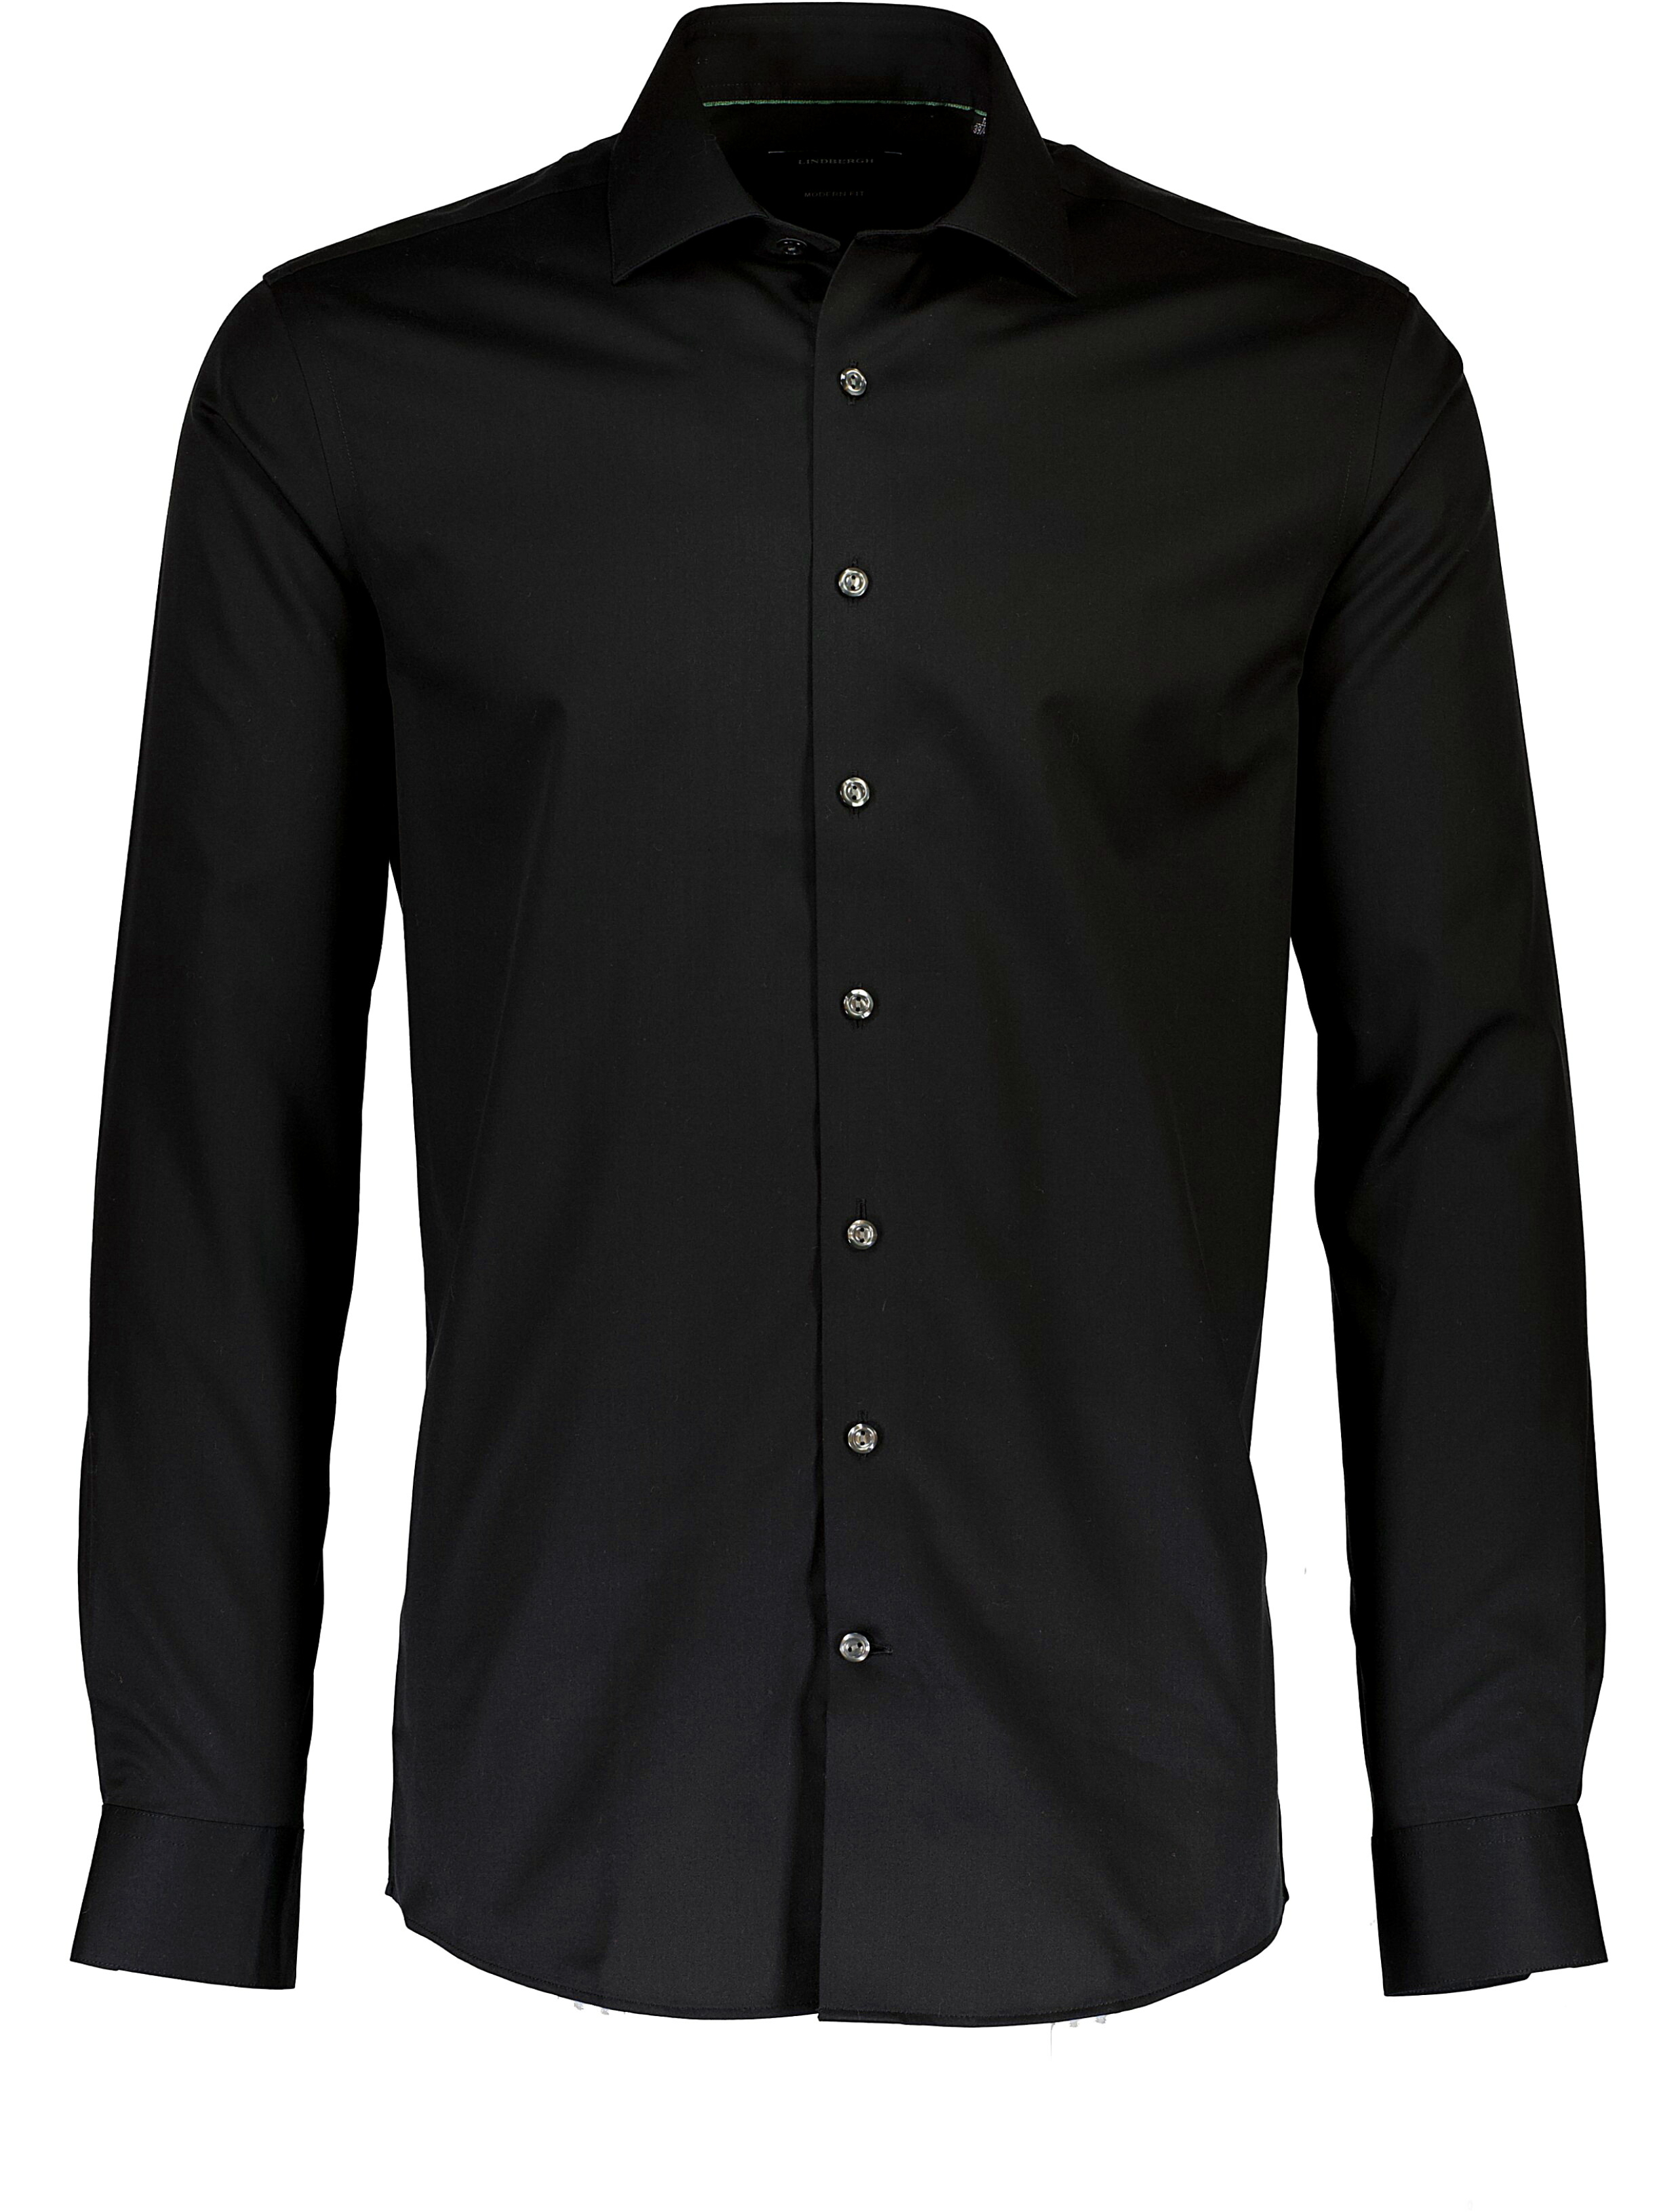 Lindbergh Business shirt black / black